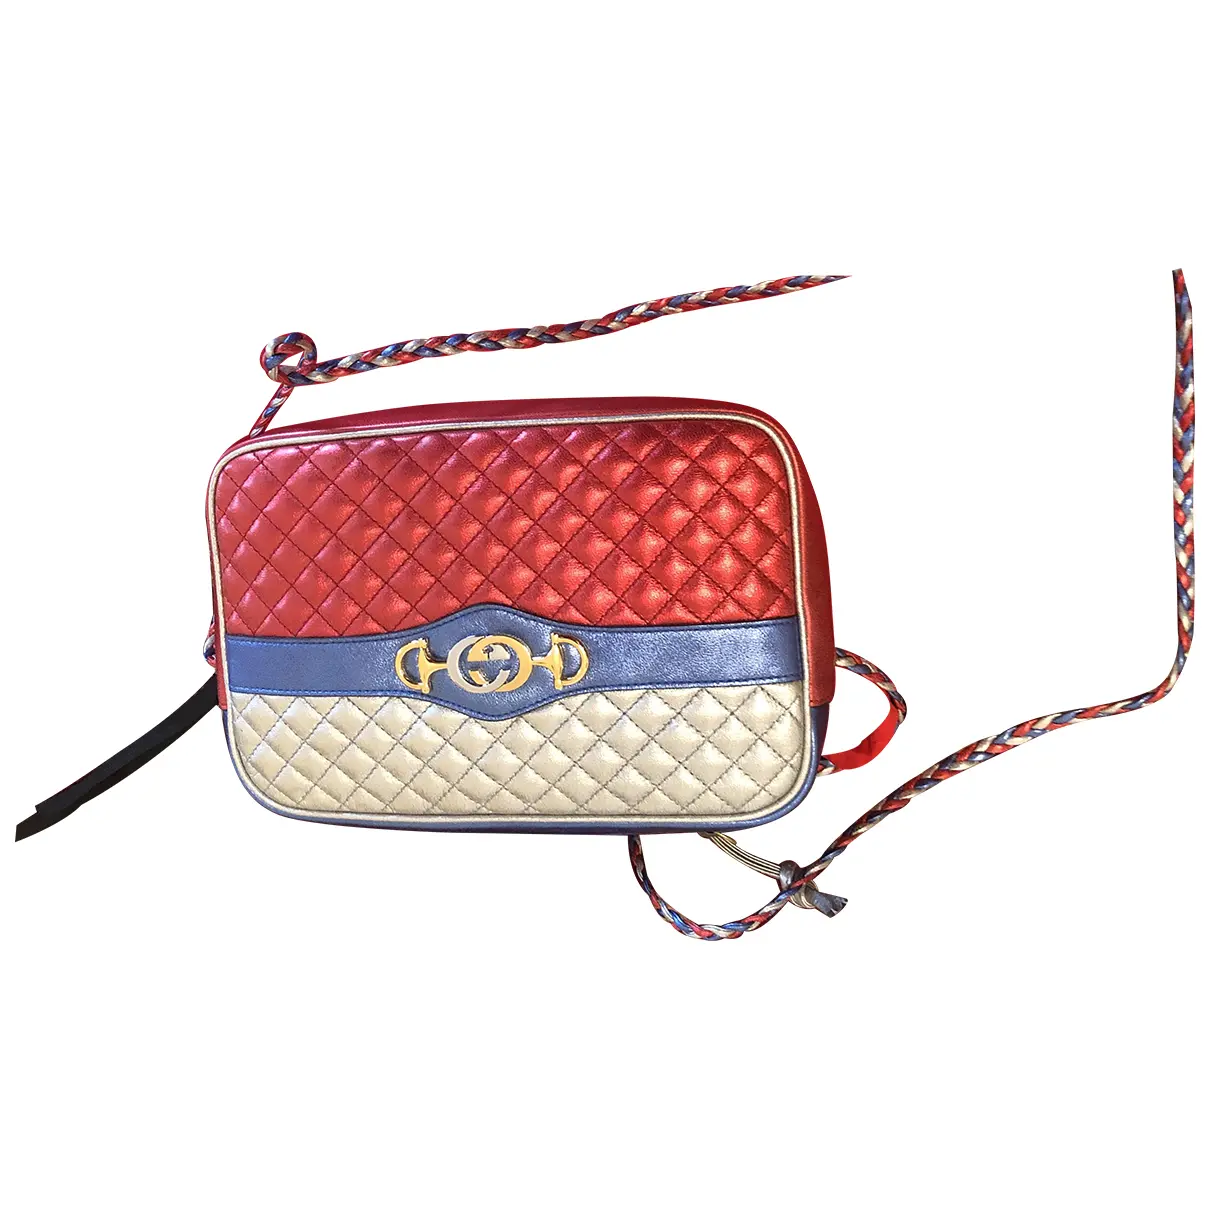 Laminated leather handbag Gucci